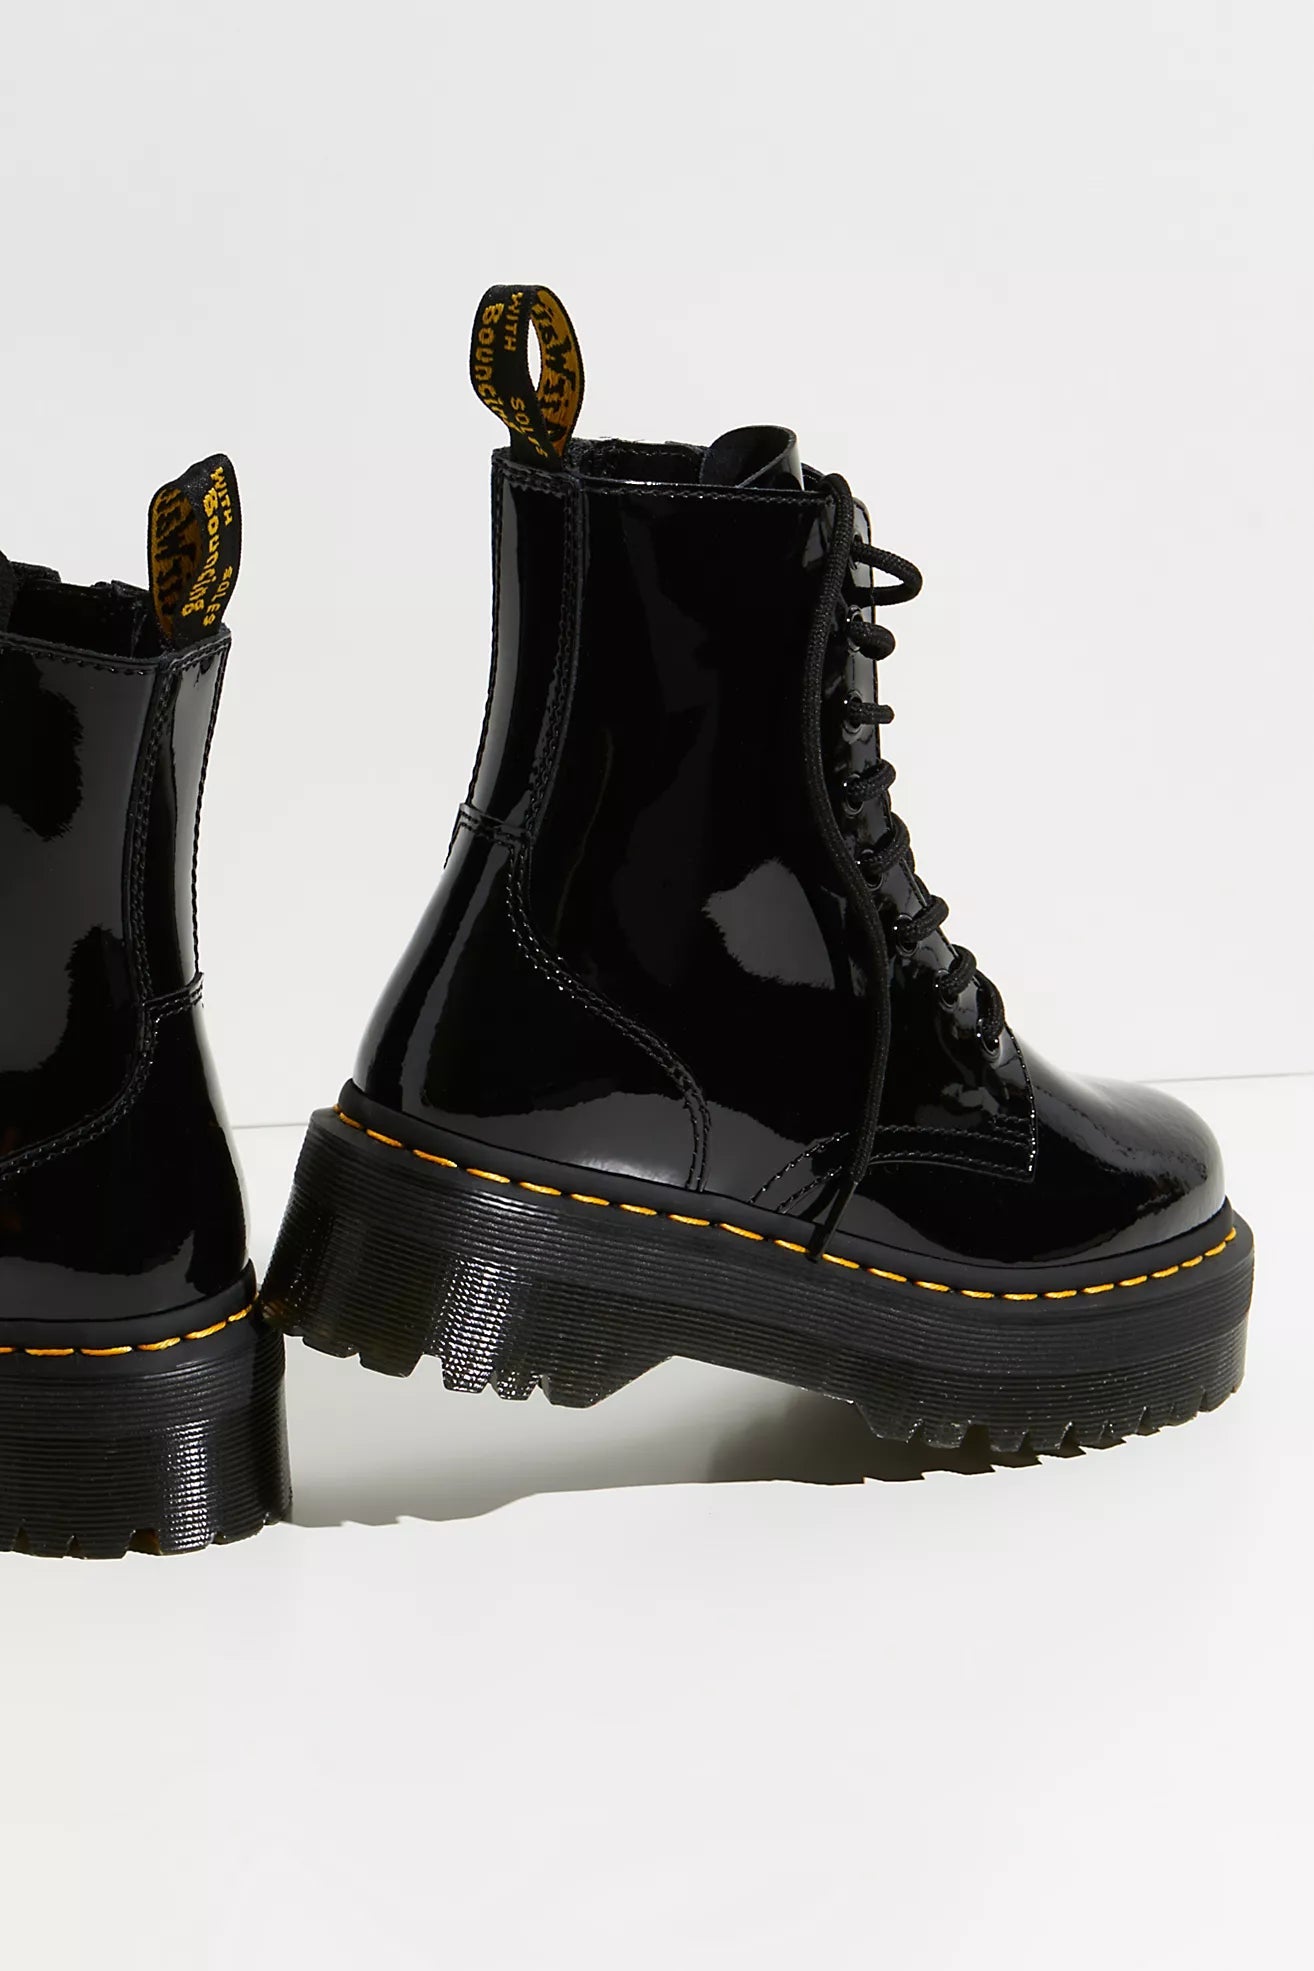 Jadon Black Patent Leather Platform Boots DM26646001 - 7